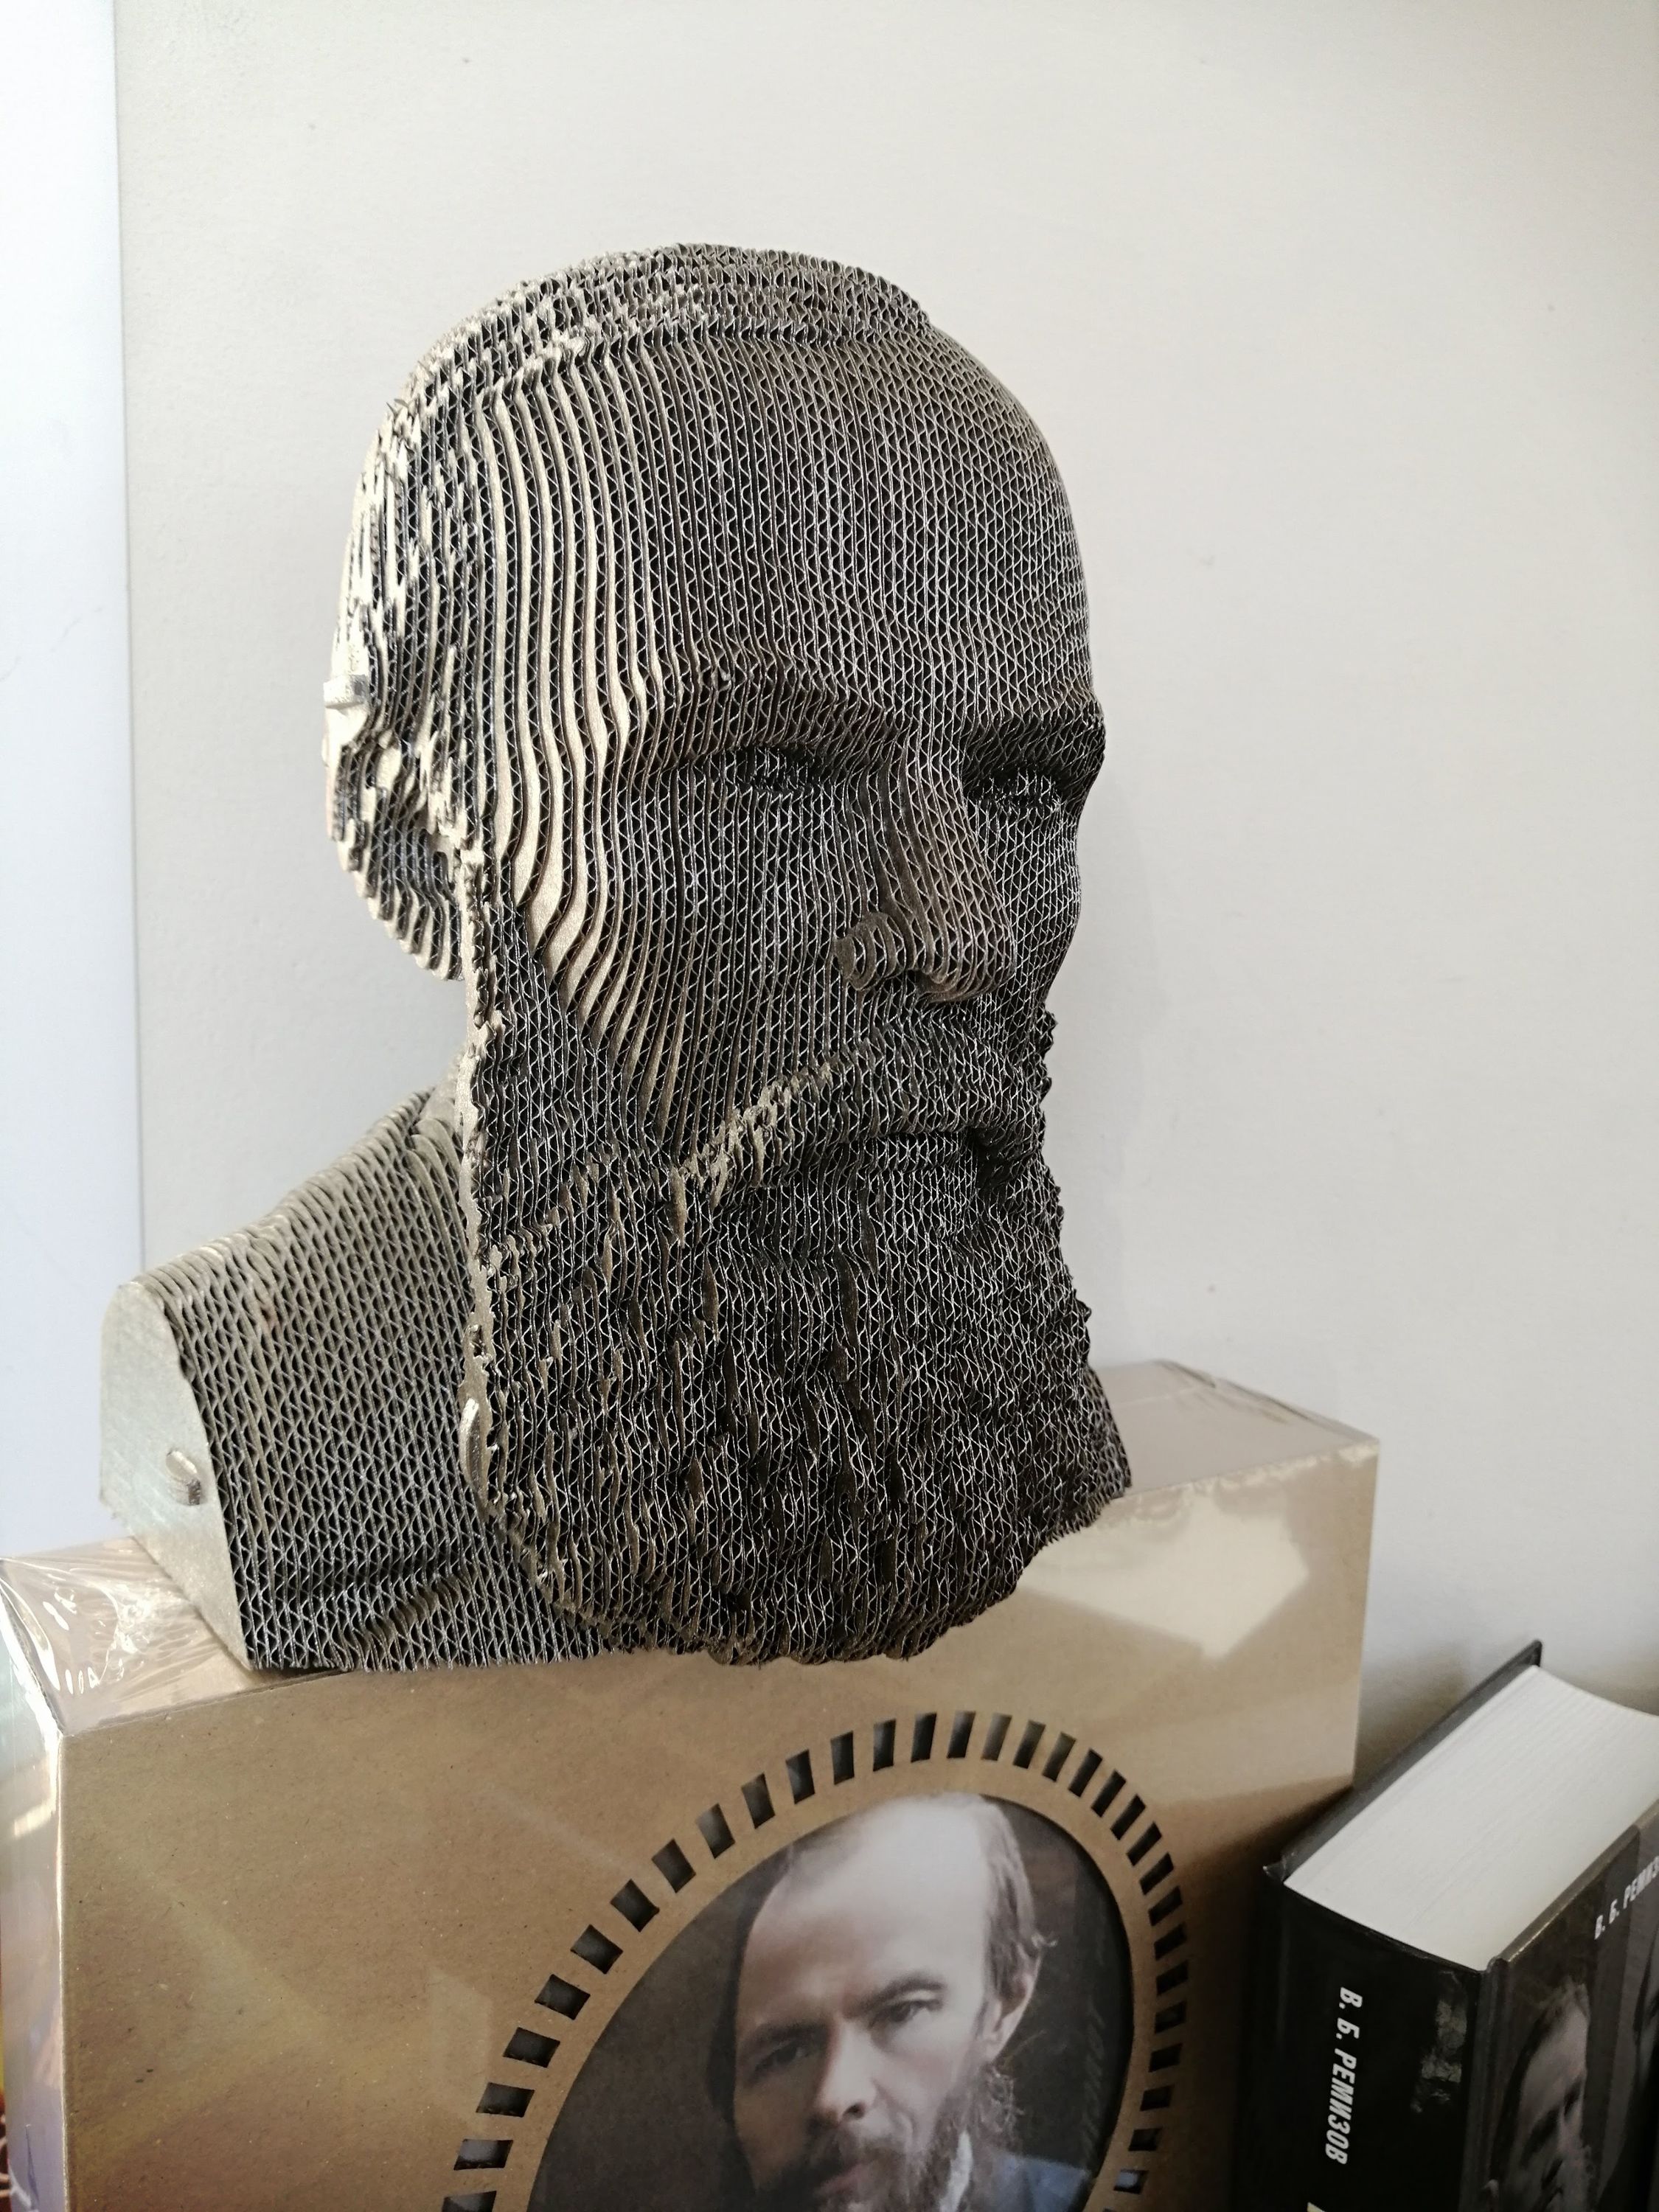 Cardboard Dostoyevsky bust